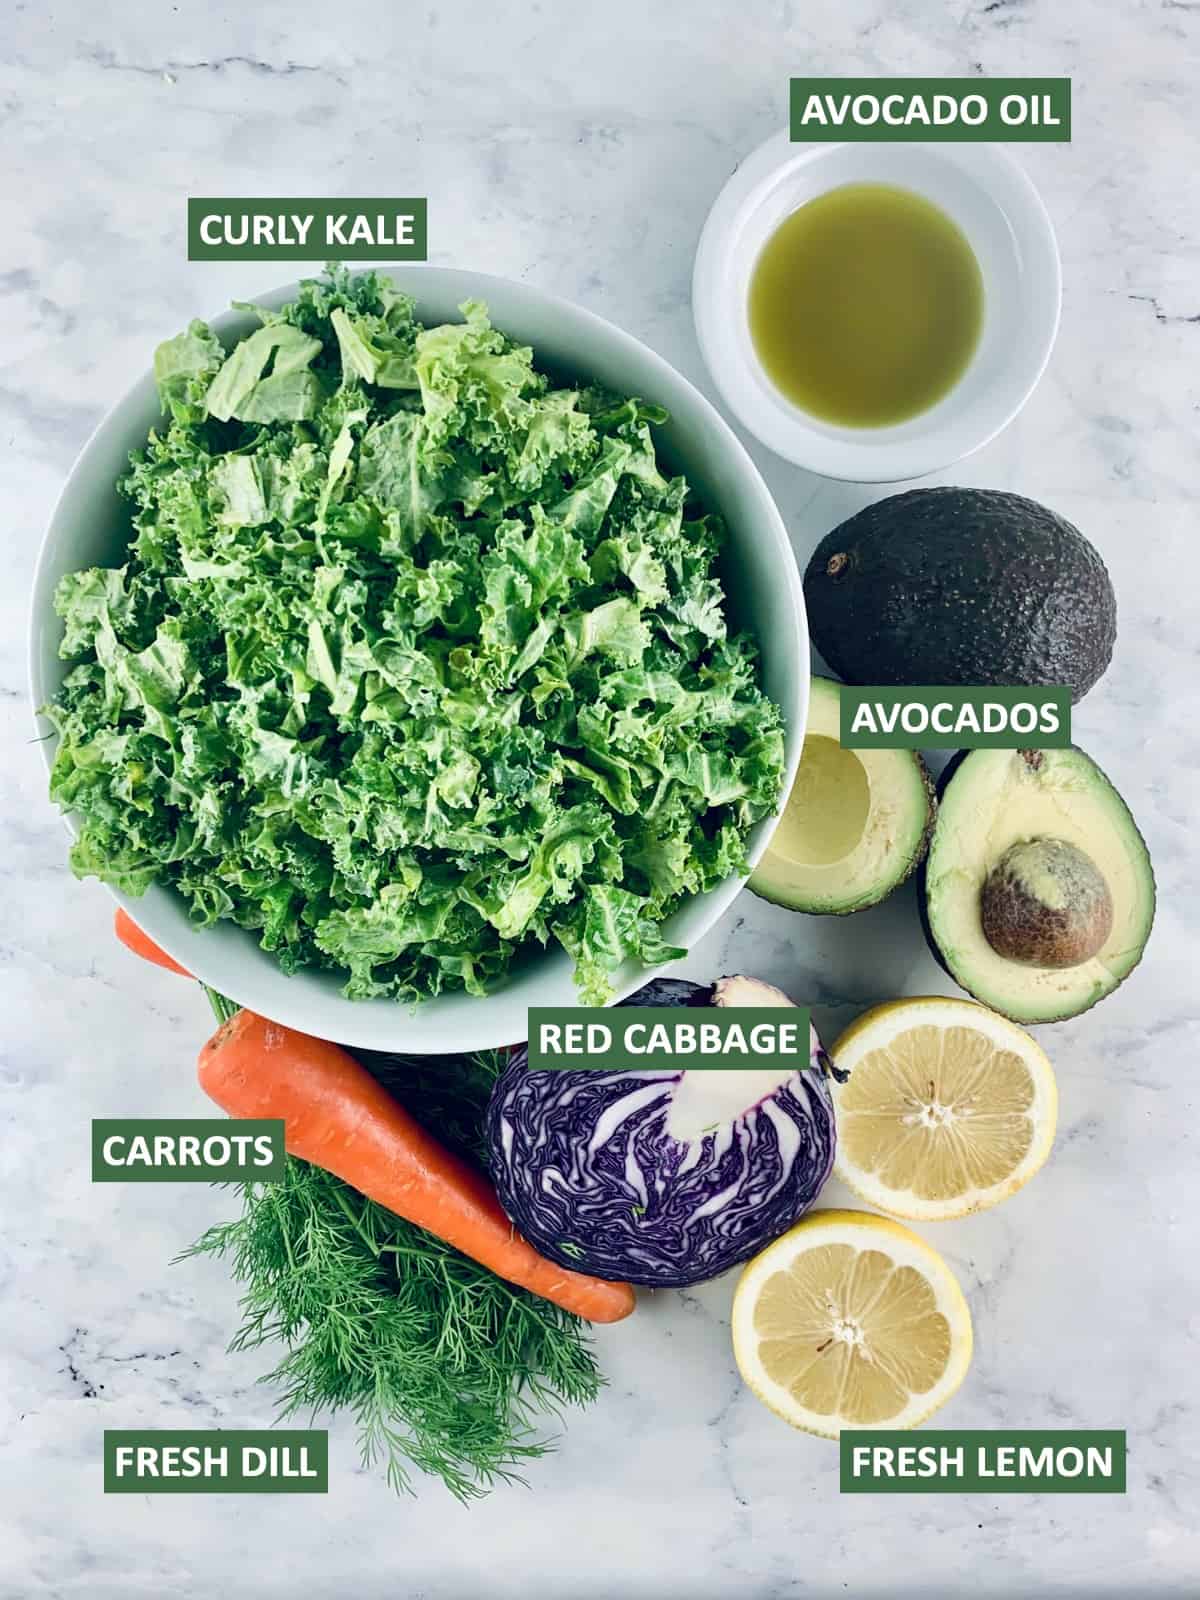 Labelled ingredients needed to make a Kale Coleslaw salad.